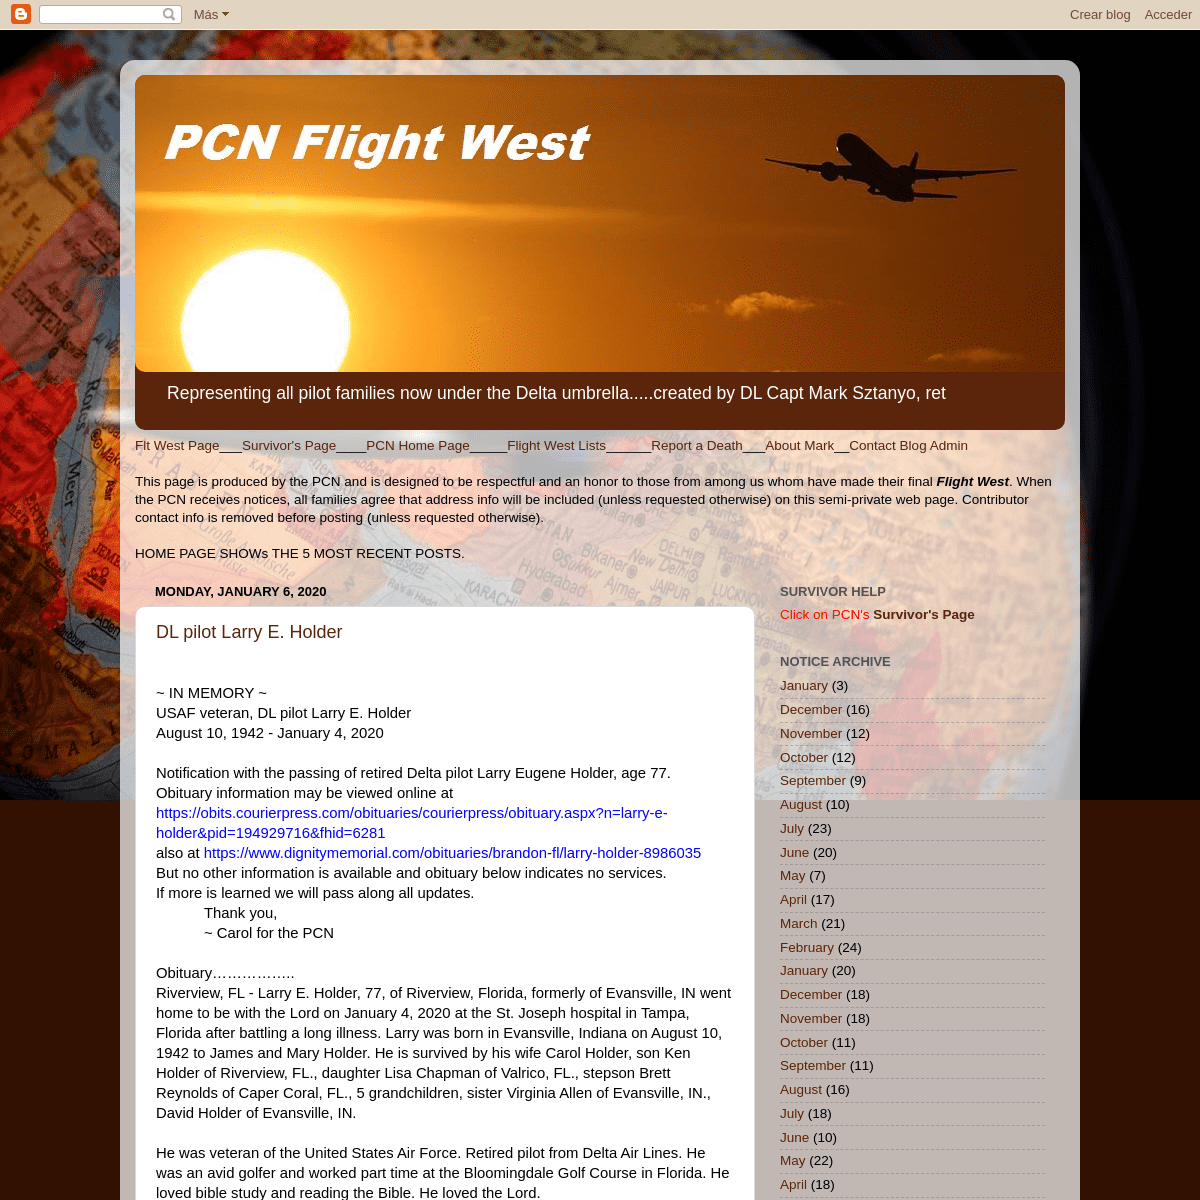 A complete backup of pcnflightwest.blogspot.com